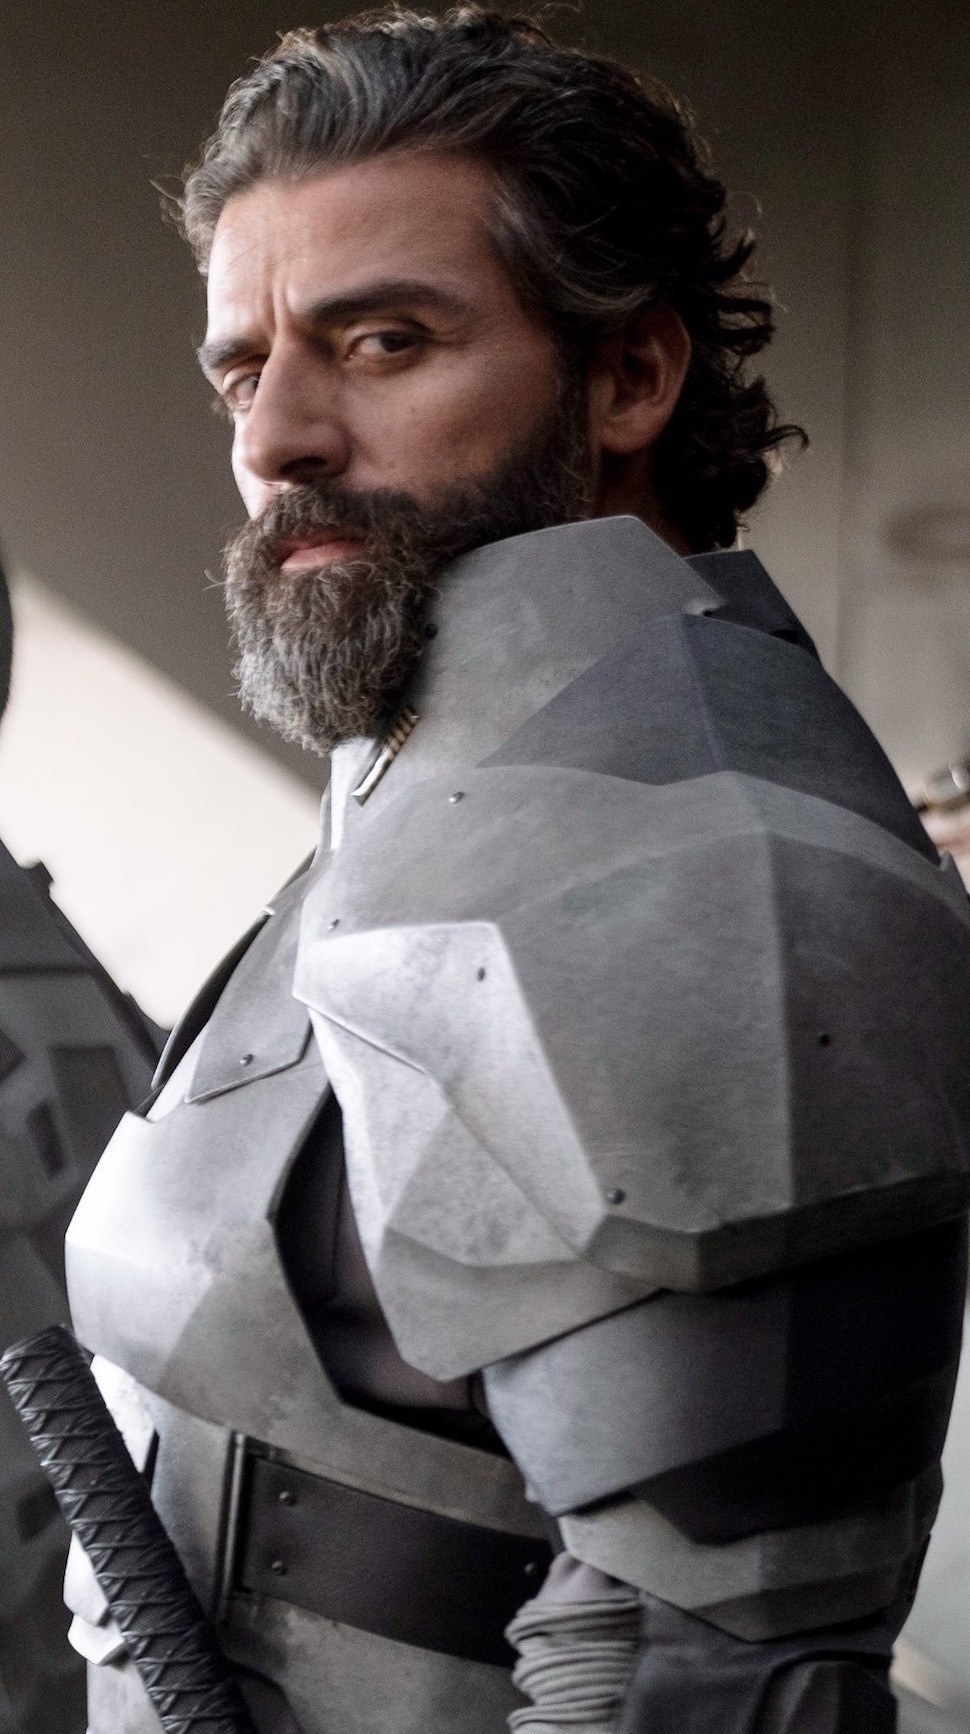 Oscar Isaac with long hair, a long beard, and wearing silver armor